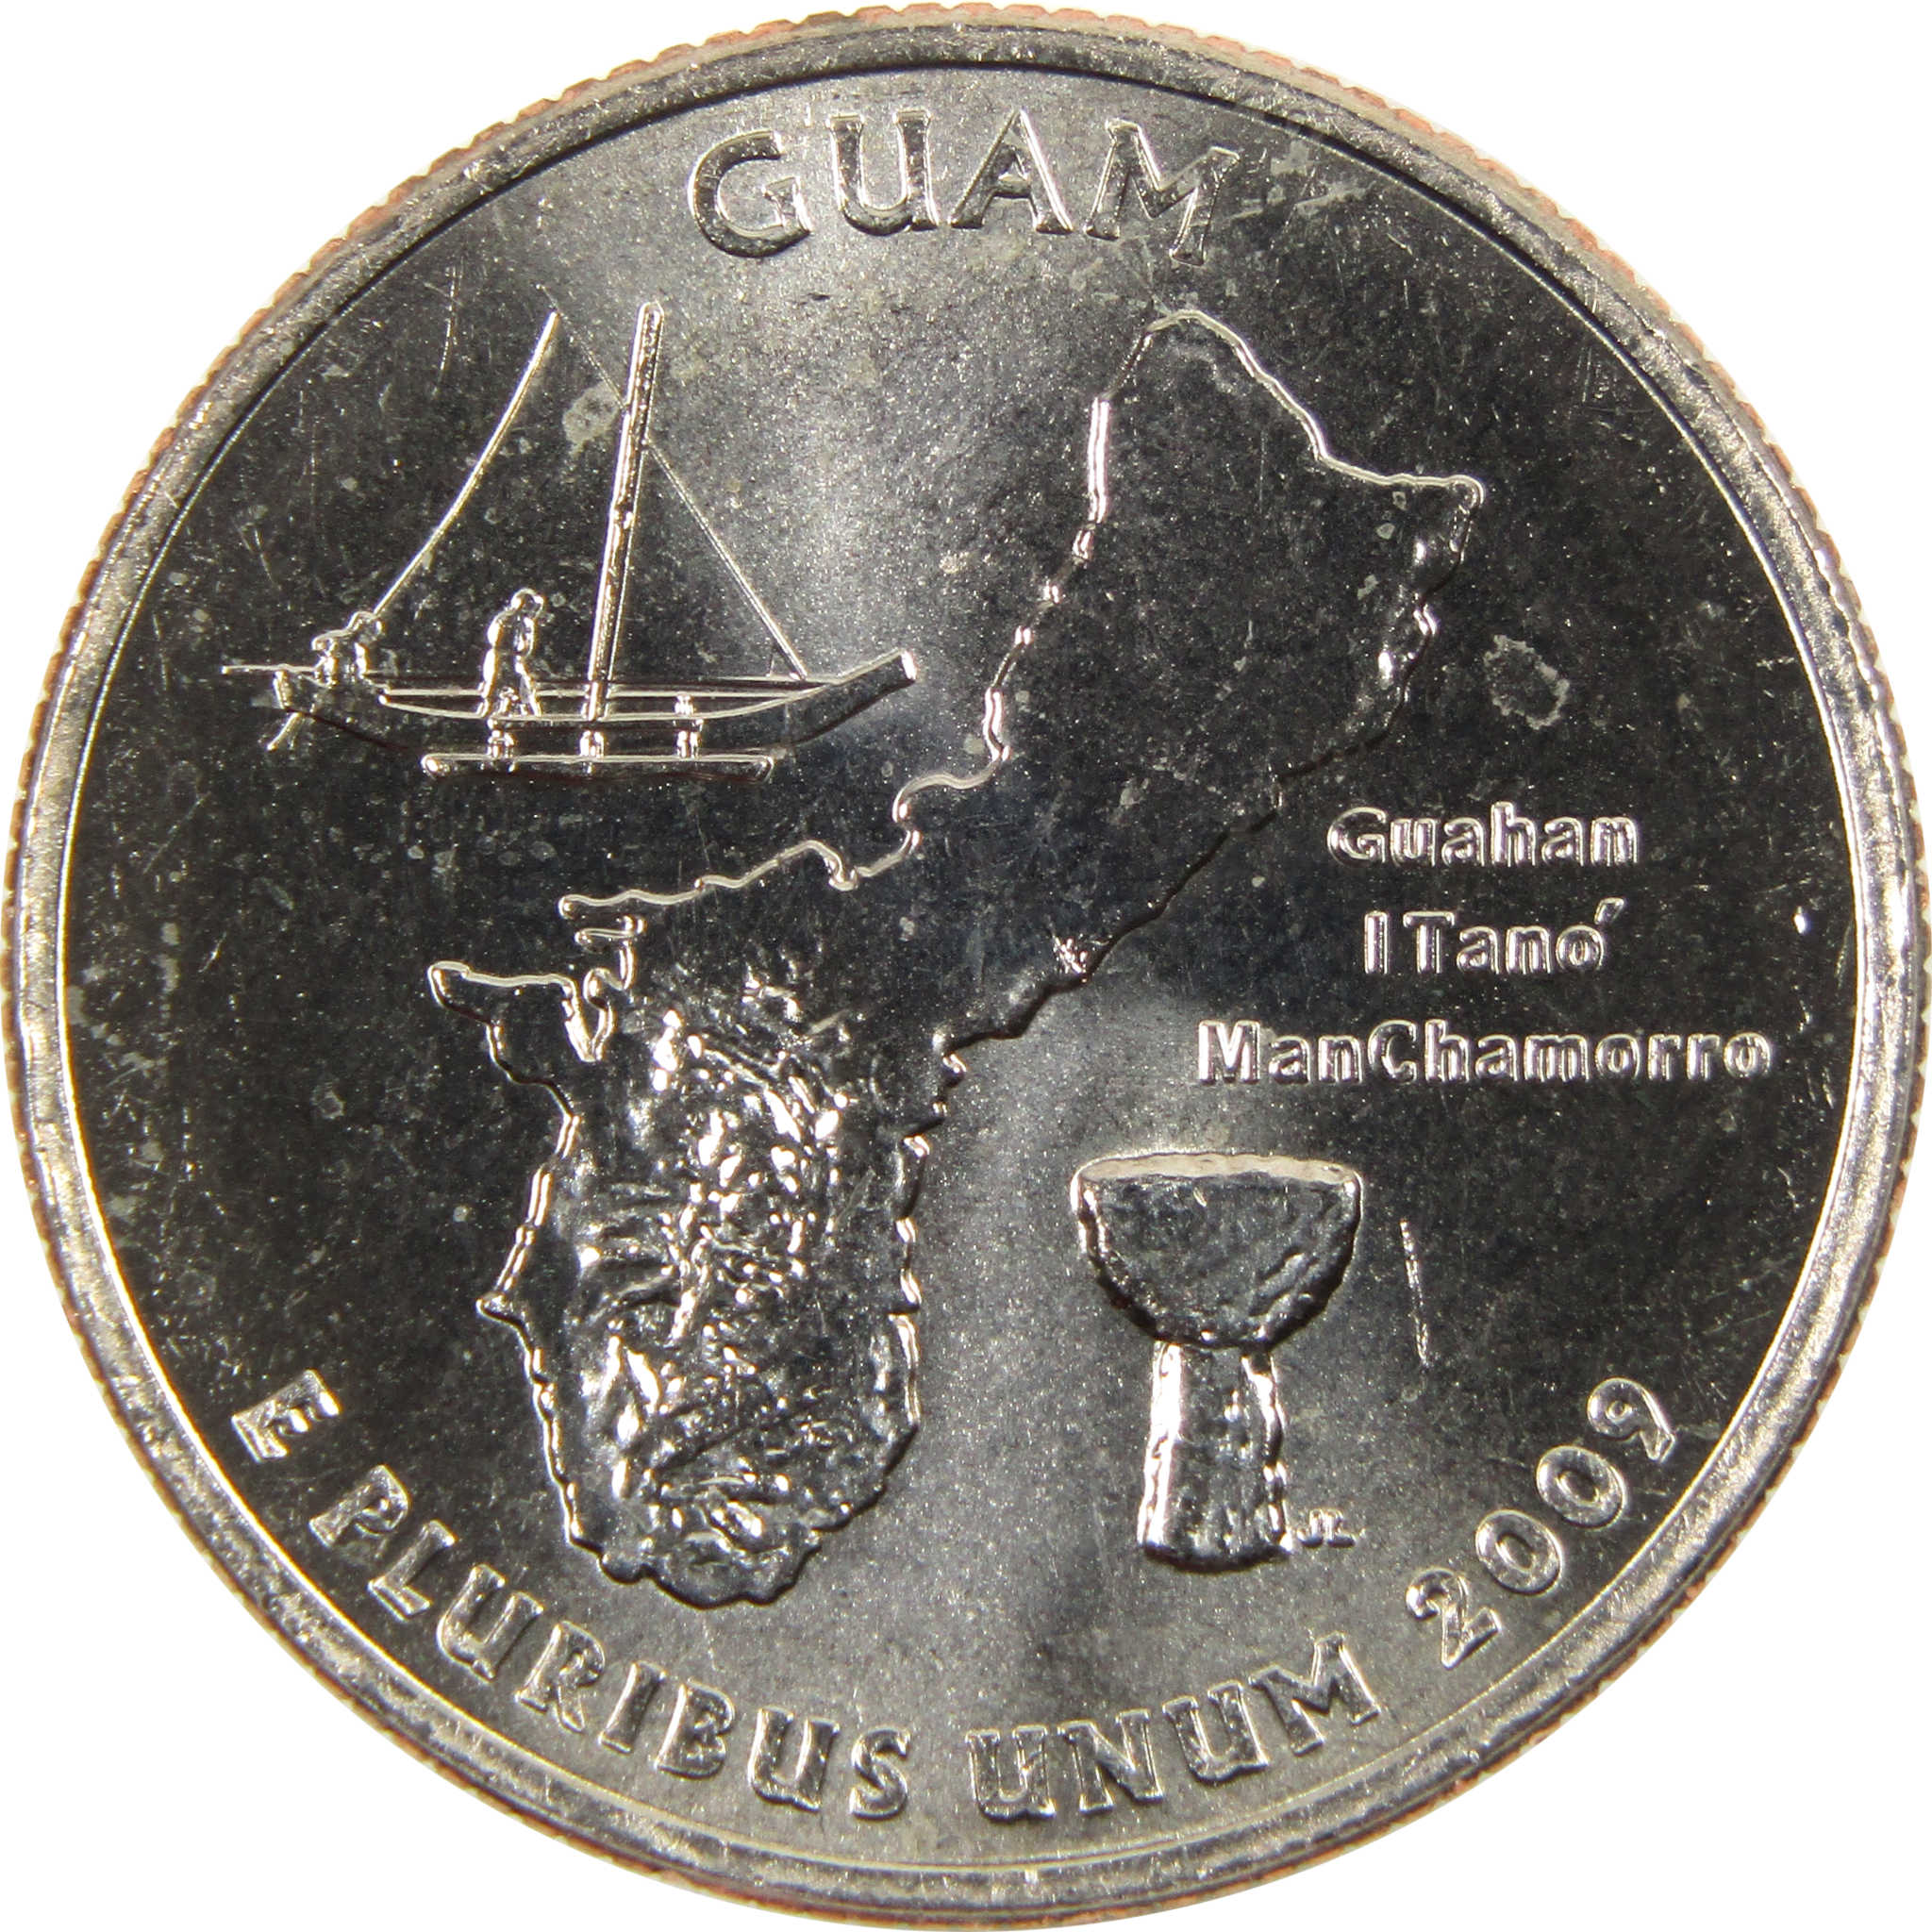 2009 P Guam DC & US Territories Quarter BU Uncirculated Clad 25c Coin